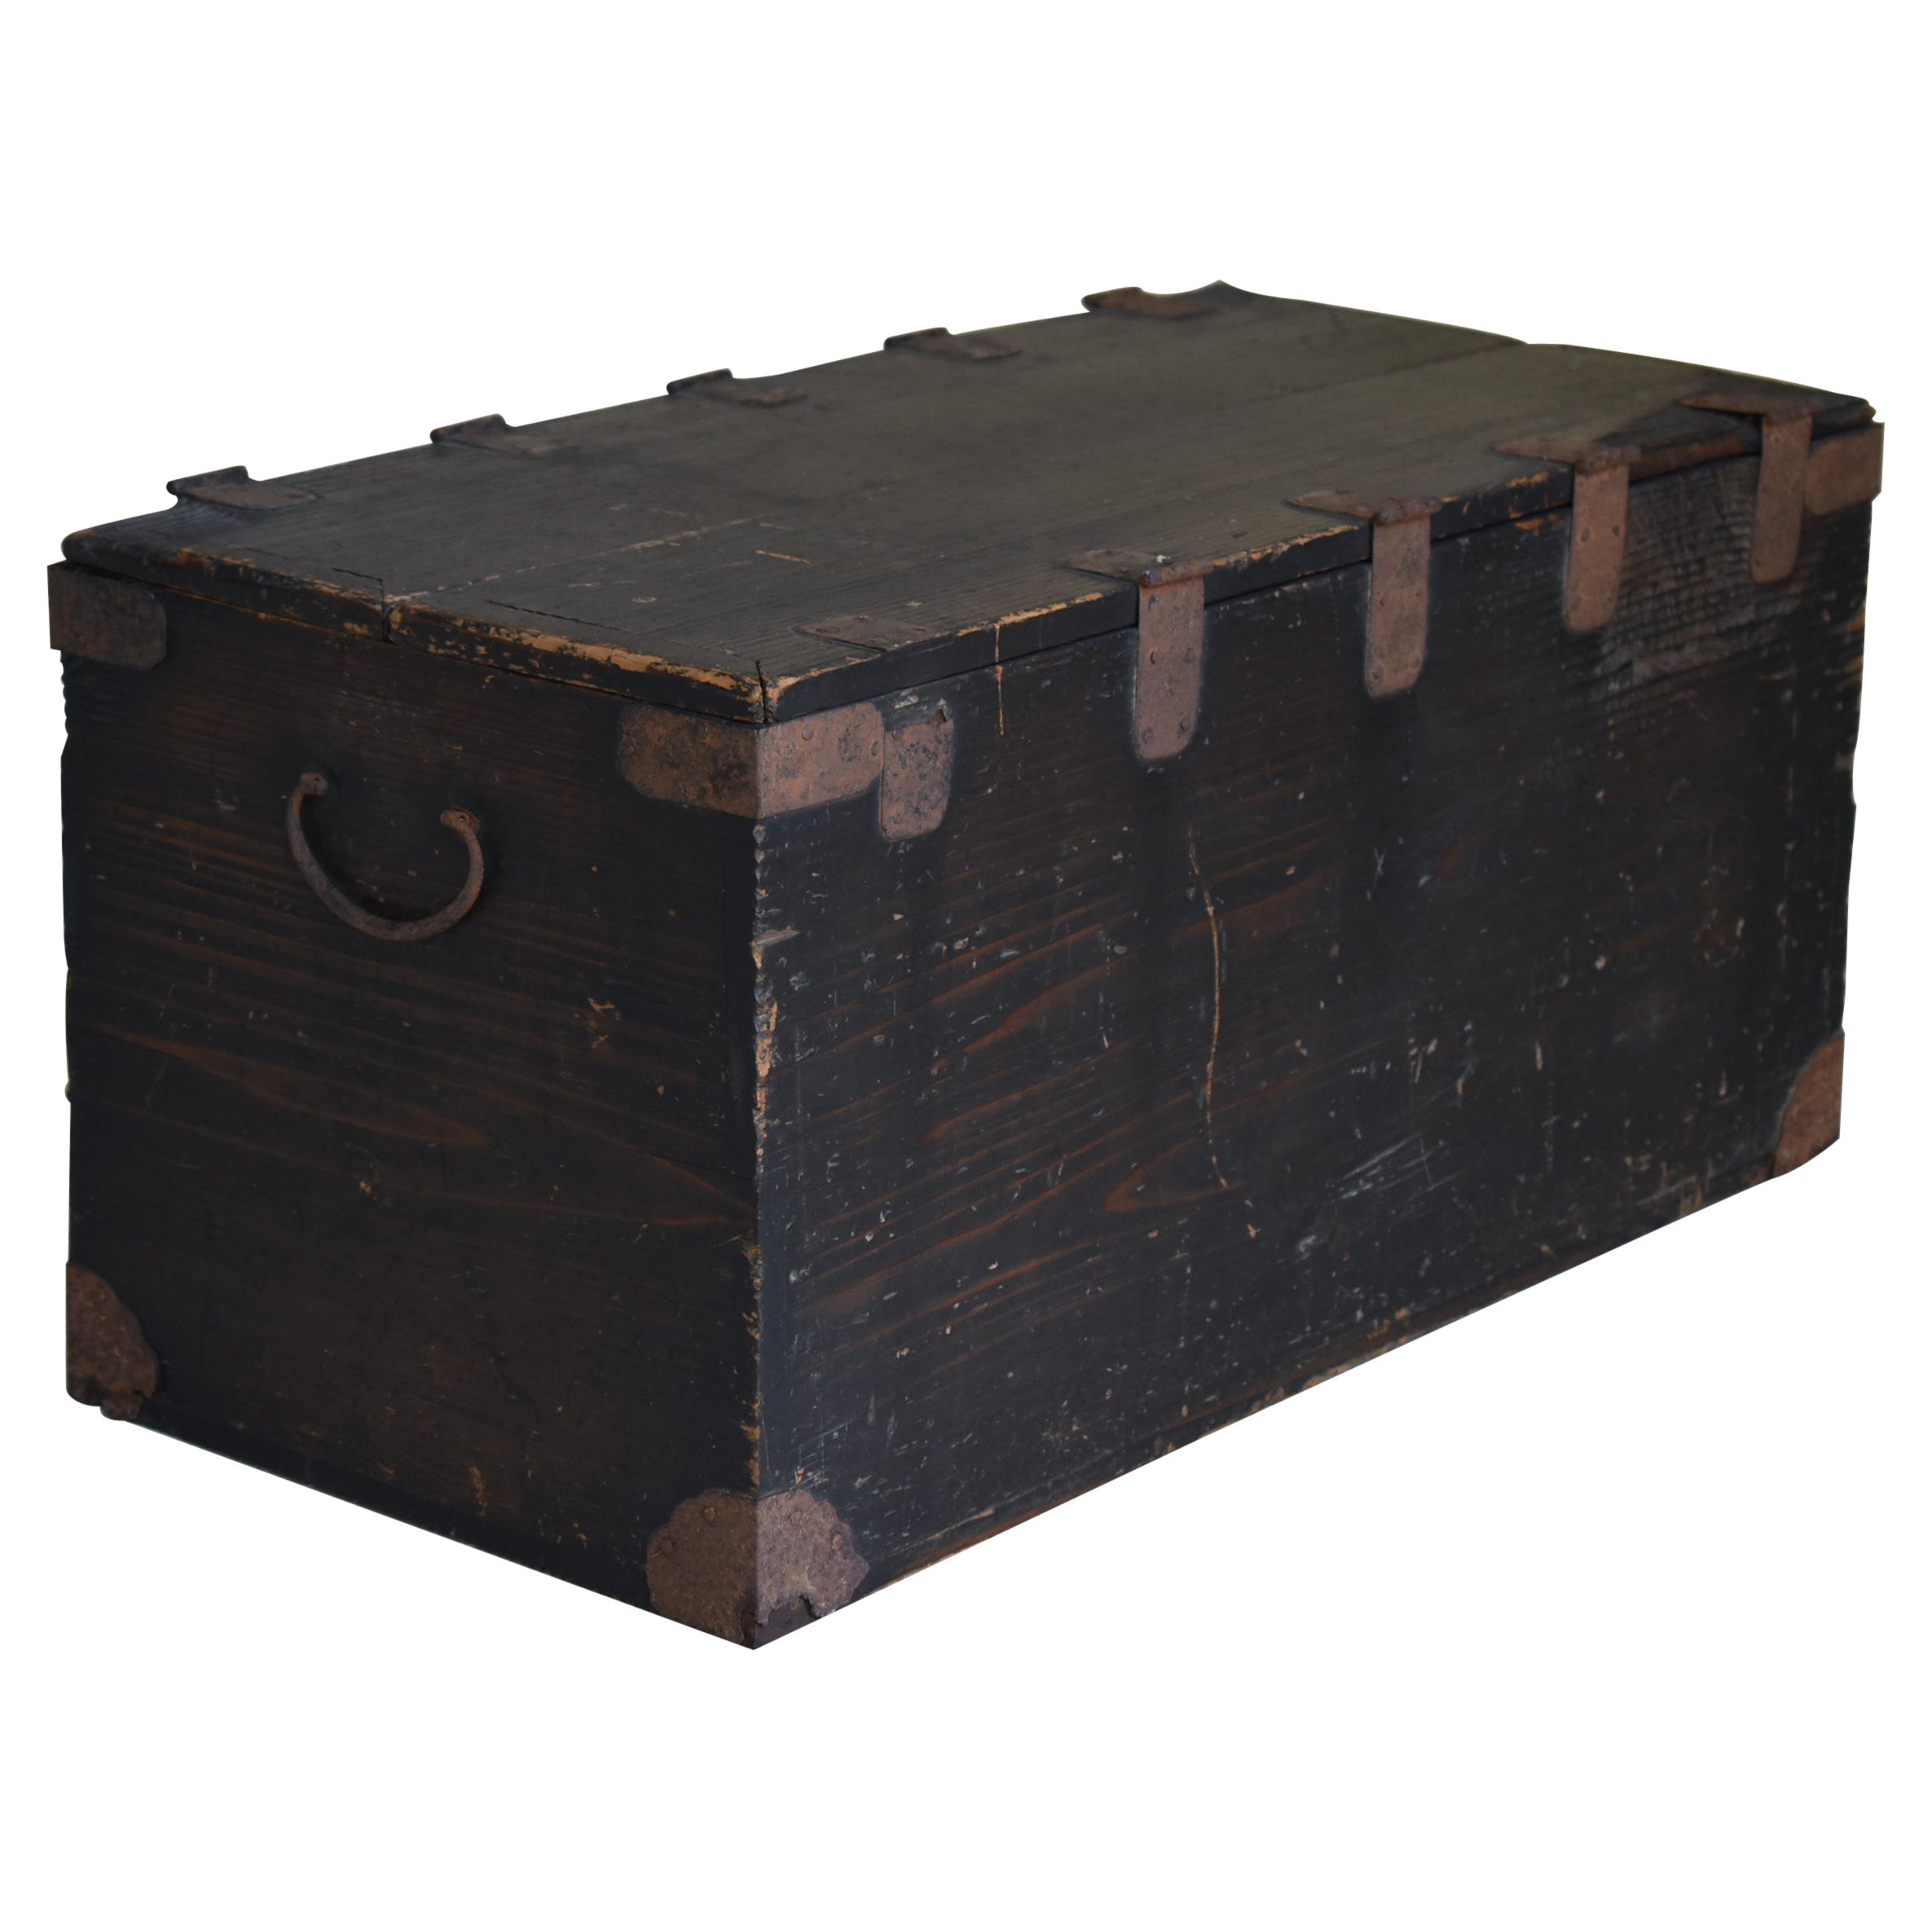 Japanese Old Wooden Box 1860s-1920s/Antique Storage Sofa Table Wabisabi Art